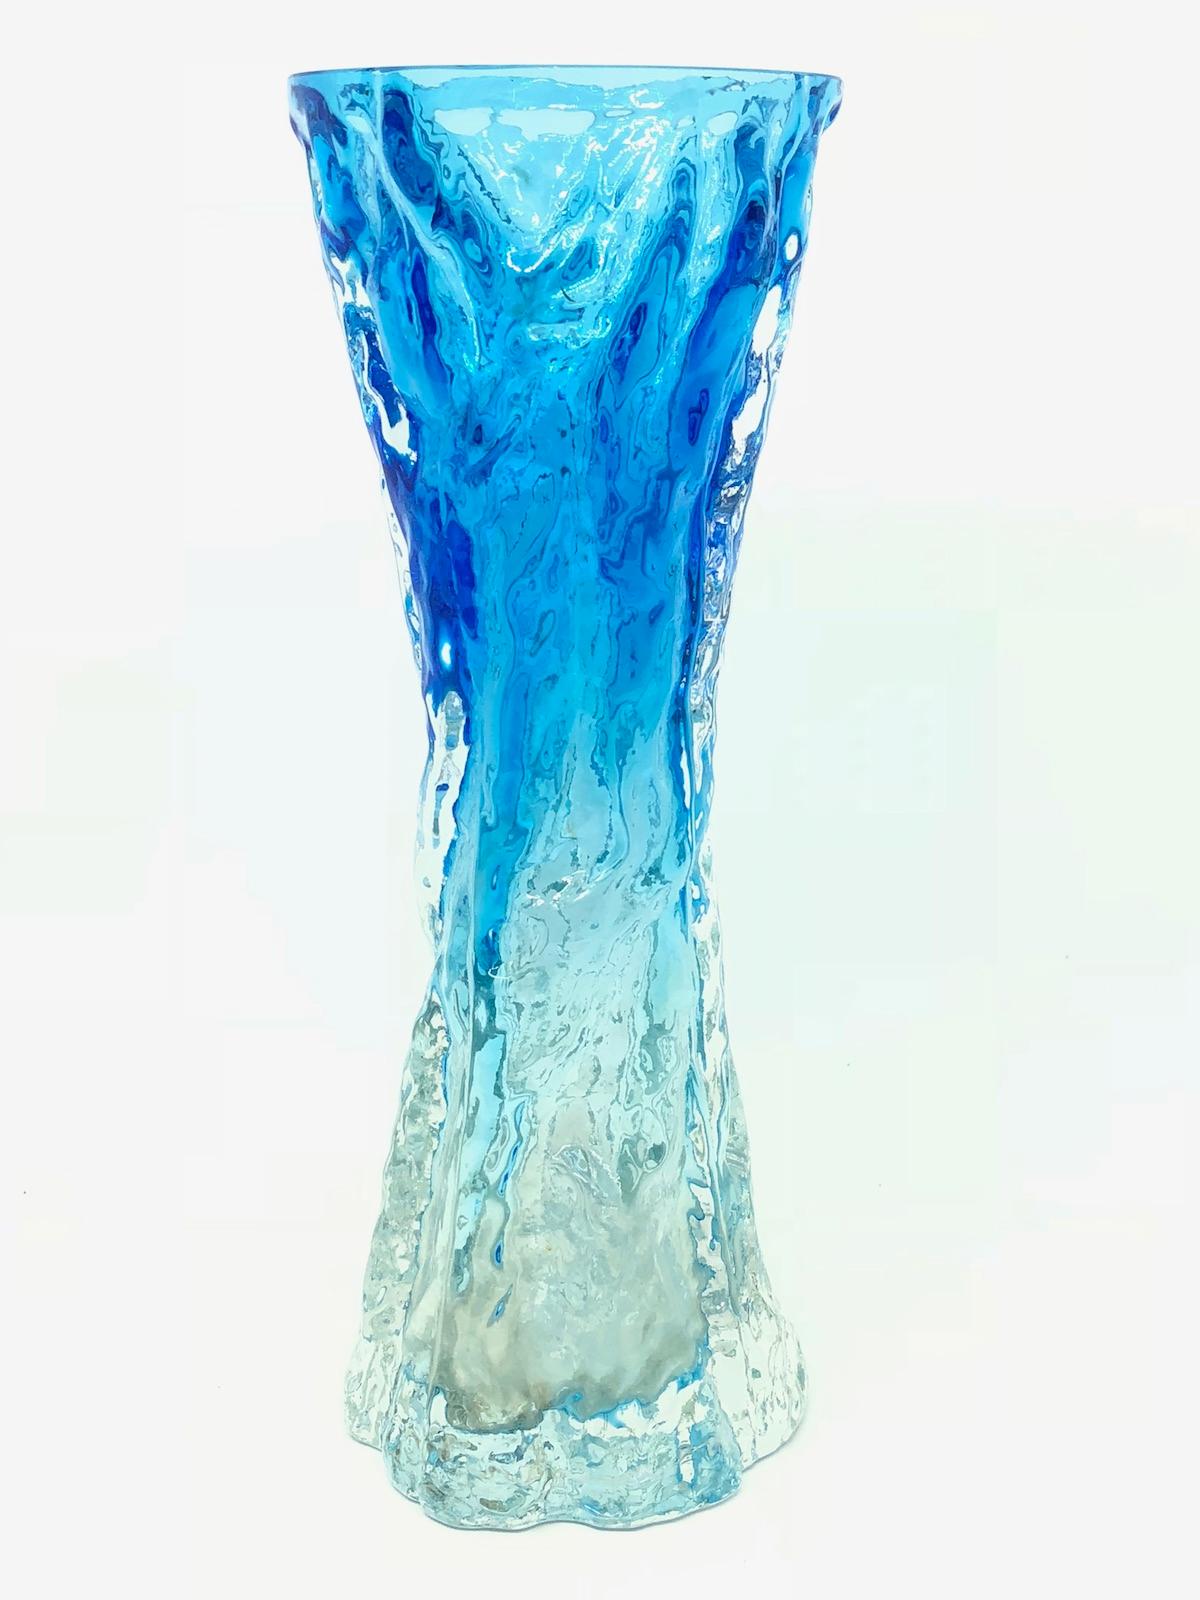 Molded Vintage German Vibrant Blue Glass Tree Bark Vase by Ingrid Glas, circa 1970s For Sale